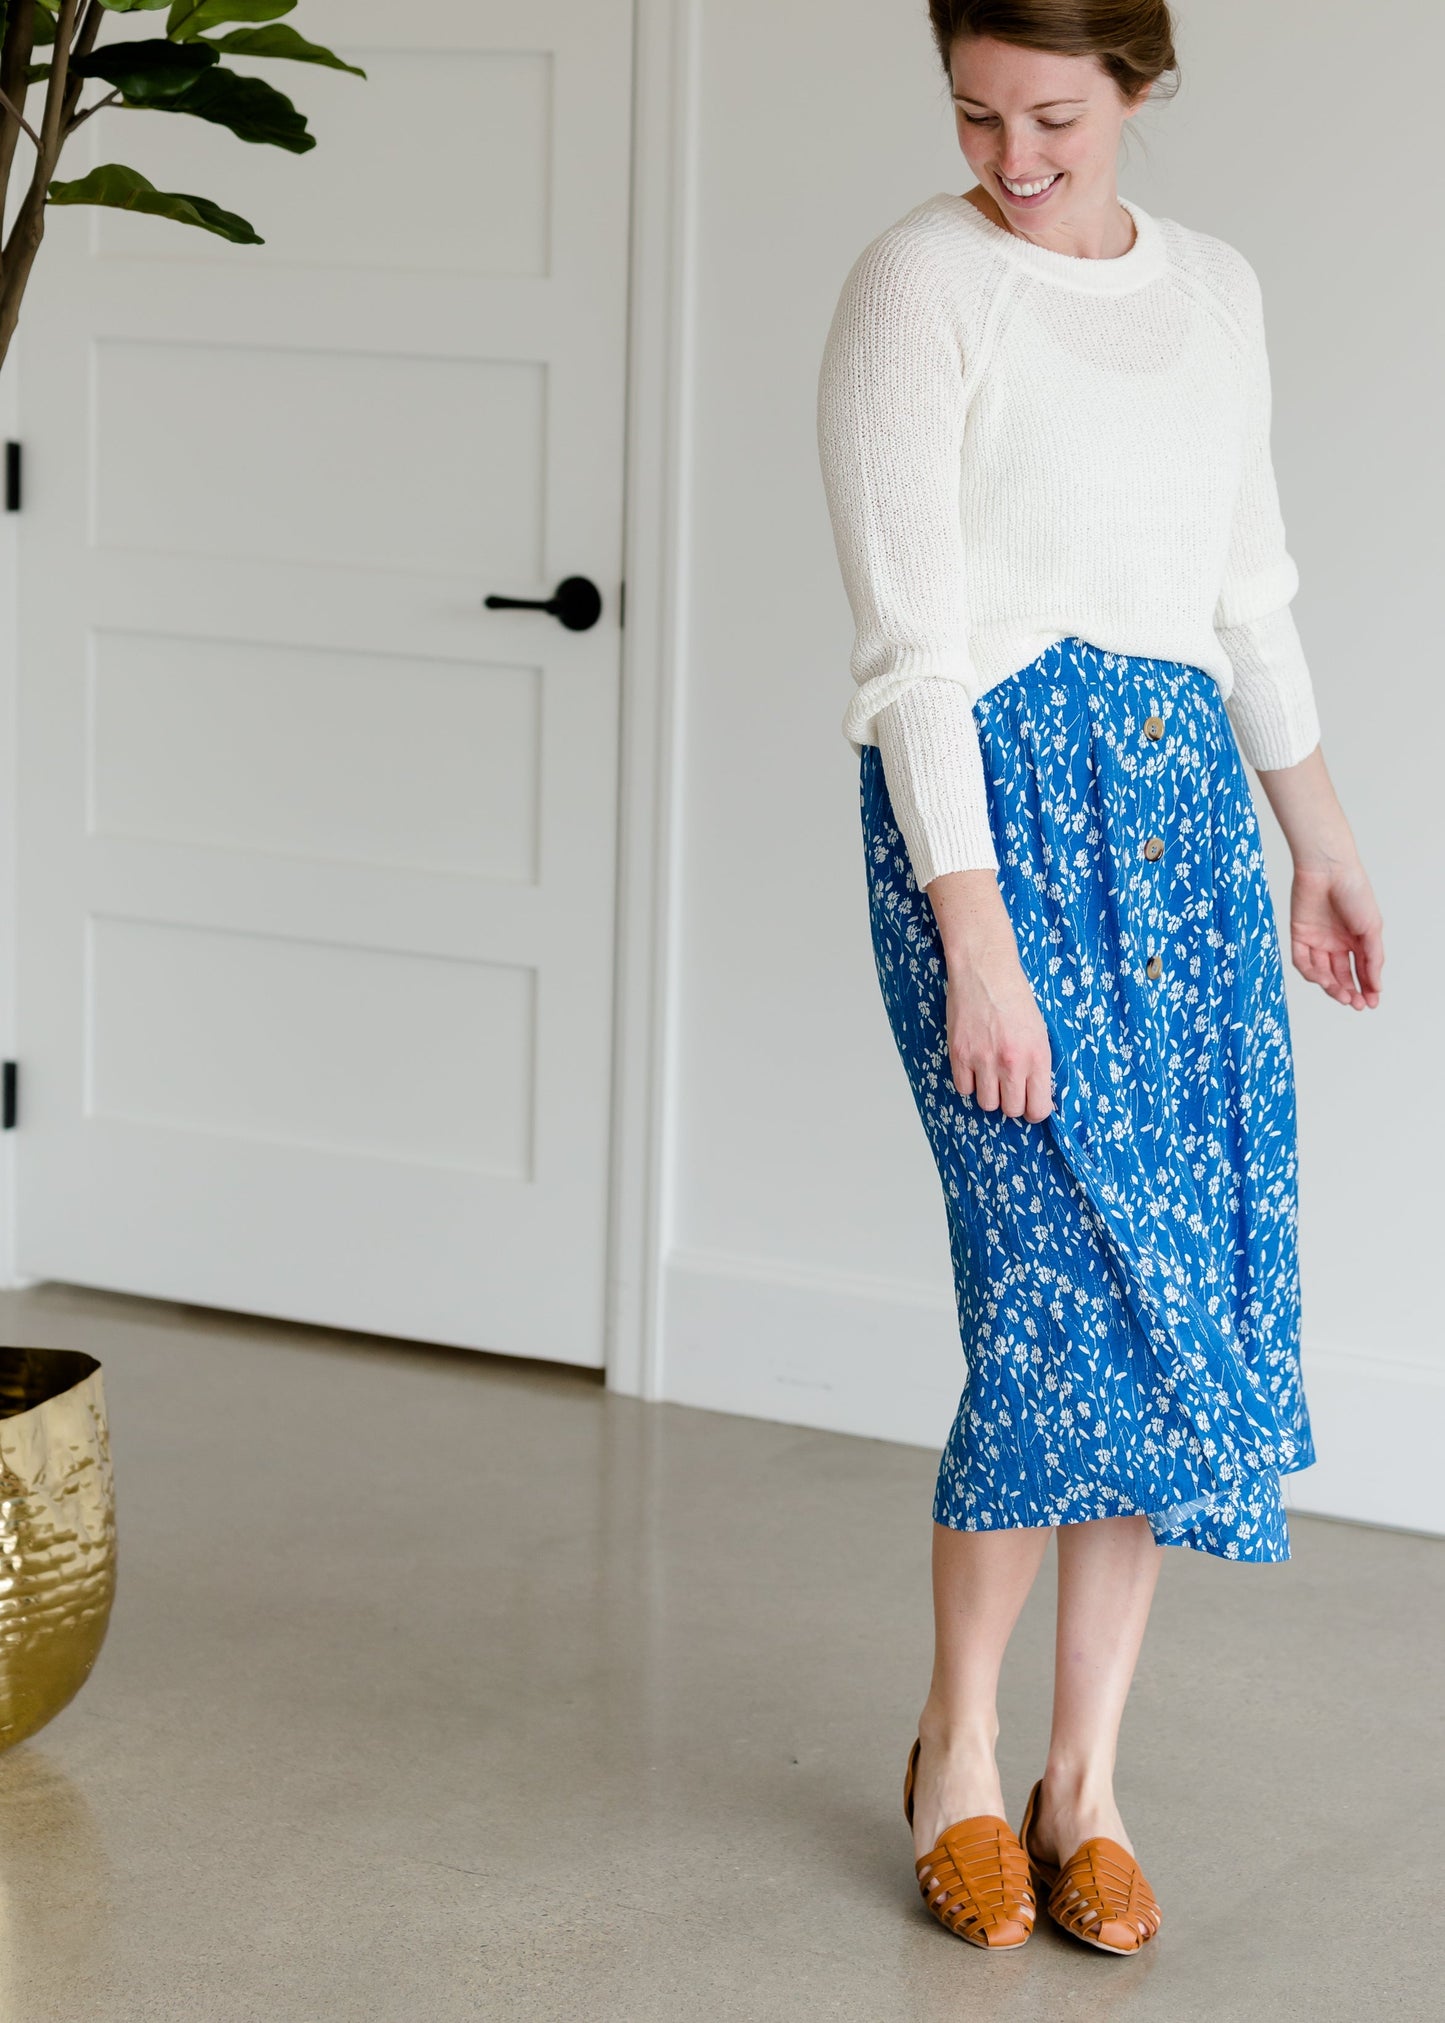 Floral Button Detail Midi Skirt - FINAL SALE Skirts